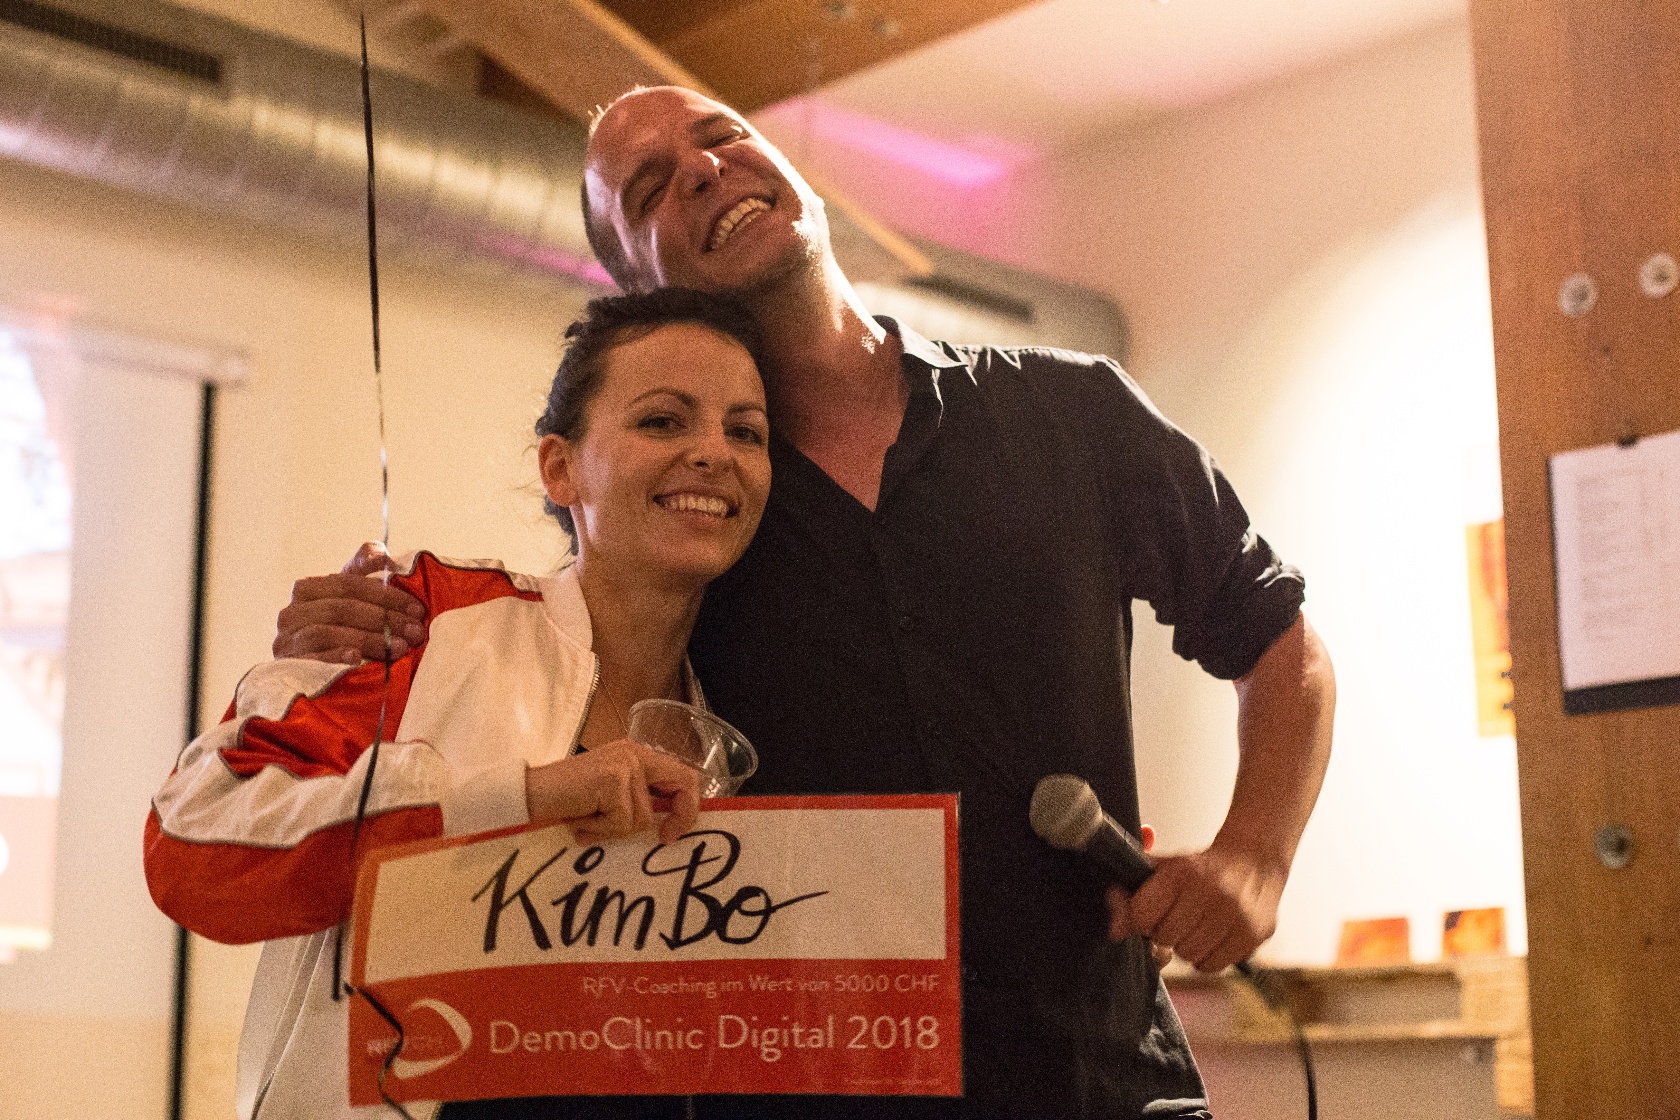 RFV-DemoClinc Digital 2018, Kimbo, Gewinnerin Coaching © Anaïs Steiner